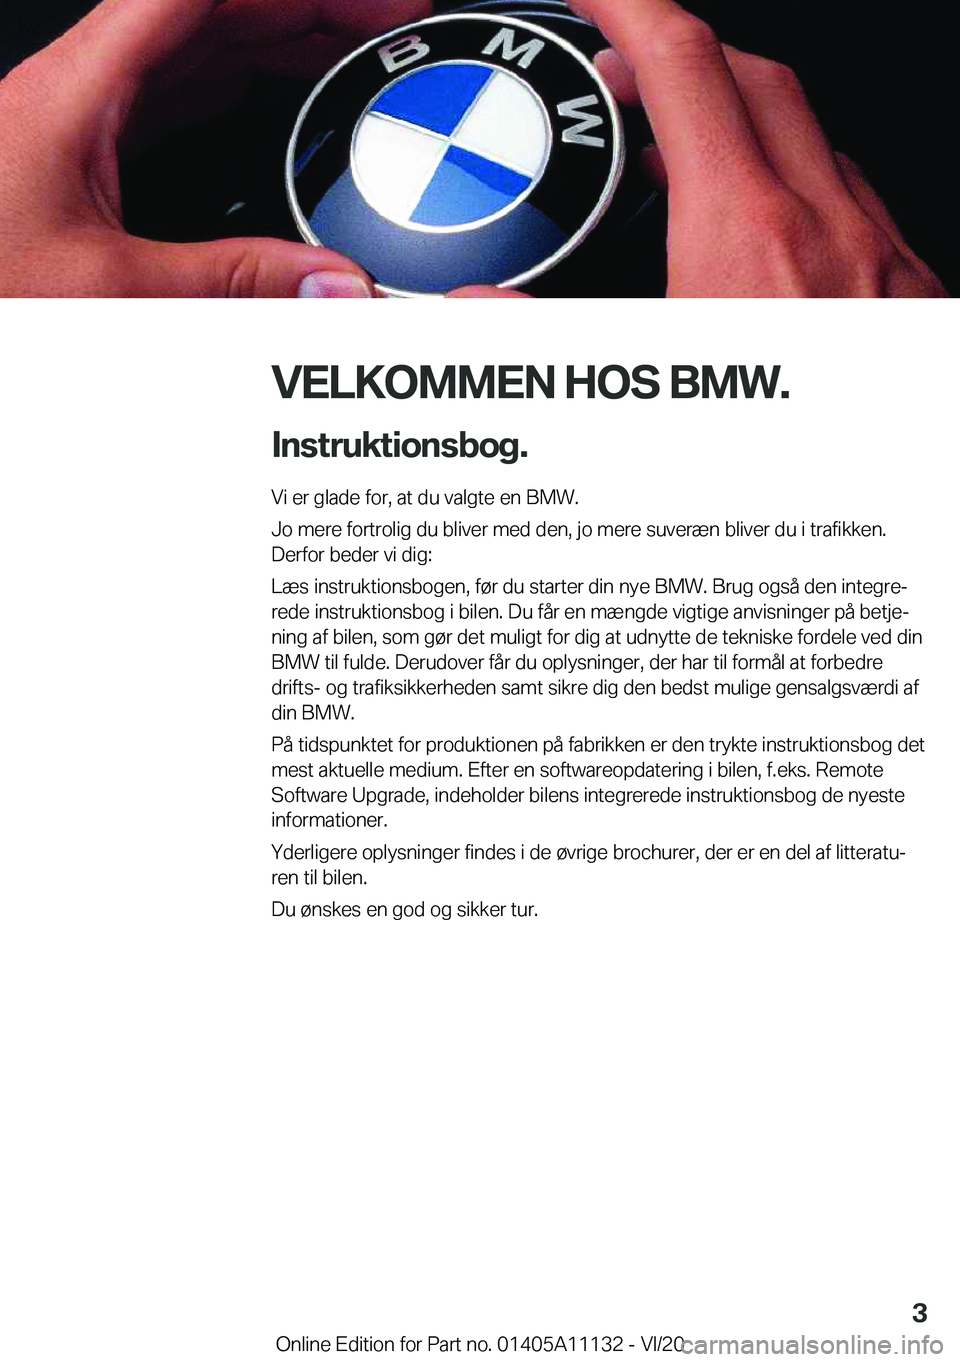 BMW 8 SERIES COUPE 2021  InstruktionsbØger (in Danish) �V�E�L�K�O�M�M�E�N��H�O�S��B�M�W�.
�I�n�s�t�r�u�k�t�i�o�n�s�b�o�g�. �V�i��e�r��g�l�a�d�e��f�o�r�,��a�t��d�u��v�a�l�g�t�e��e�n��B�M�W�.
�J�o��m�e�r�e��f�o�r�t�r�o�l�i�g��d�u��b�l�i�v�e�r�